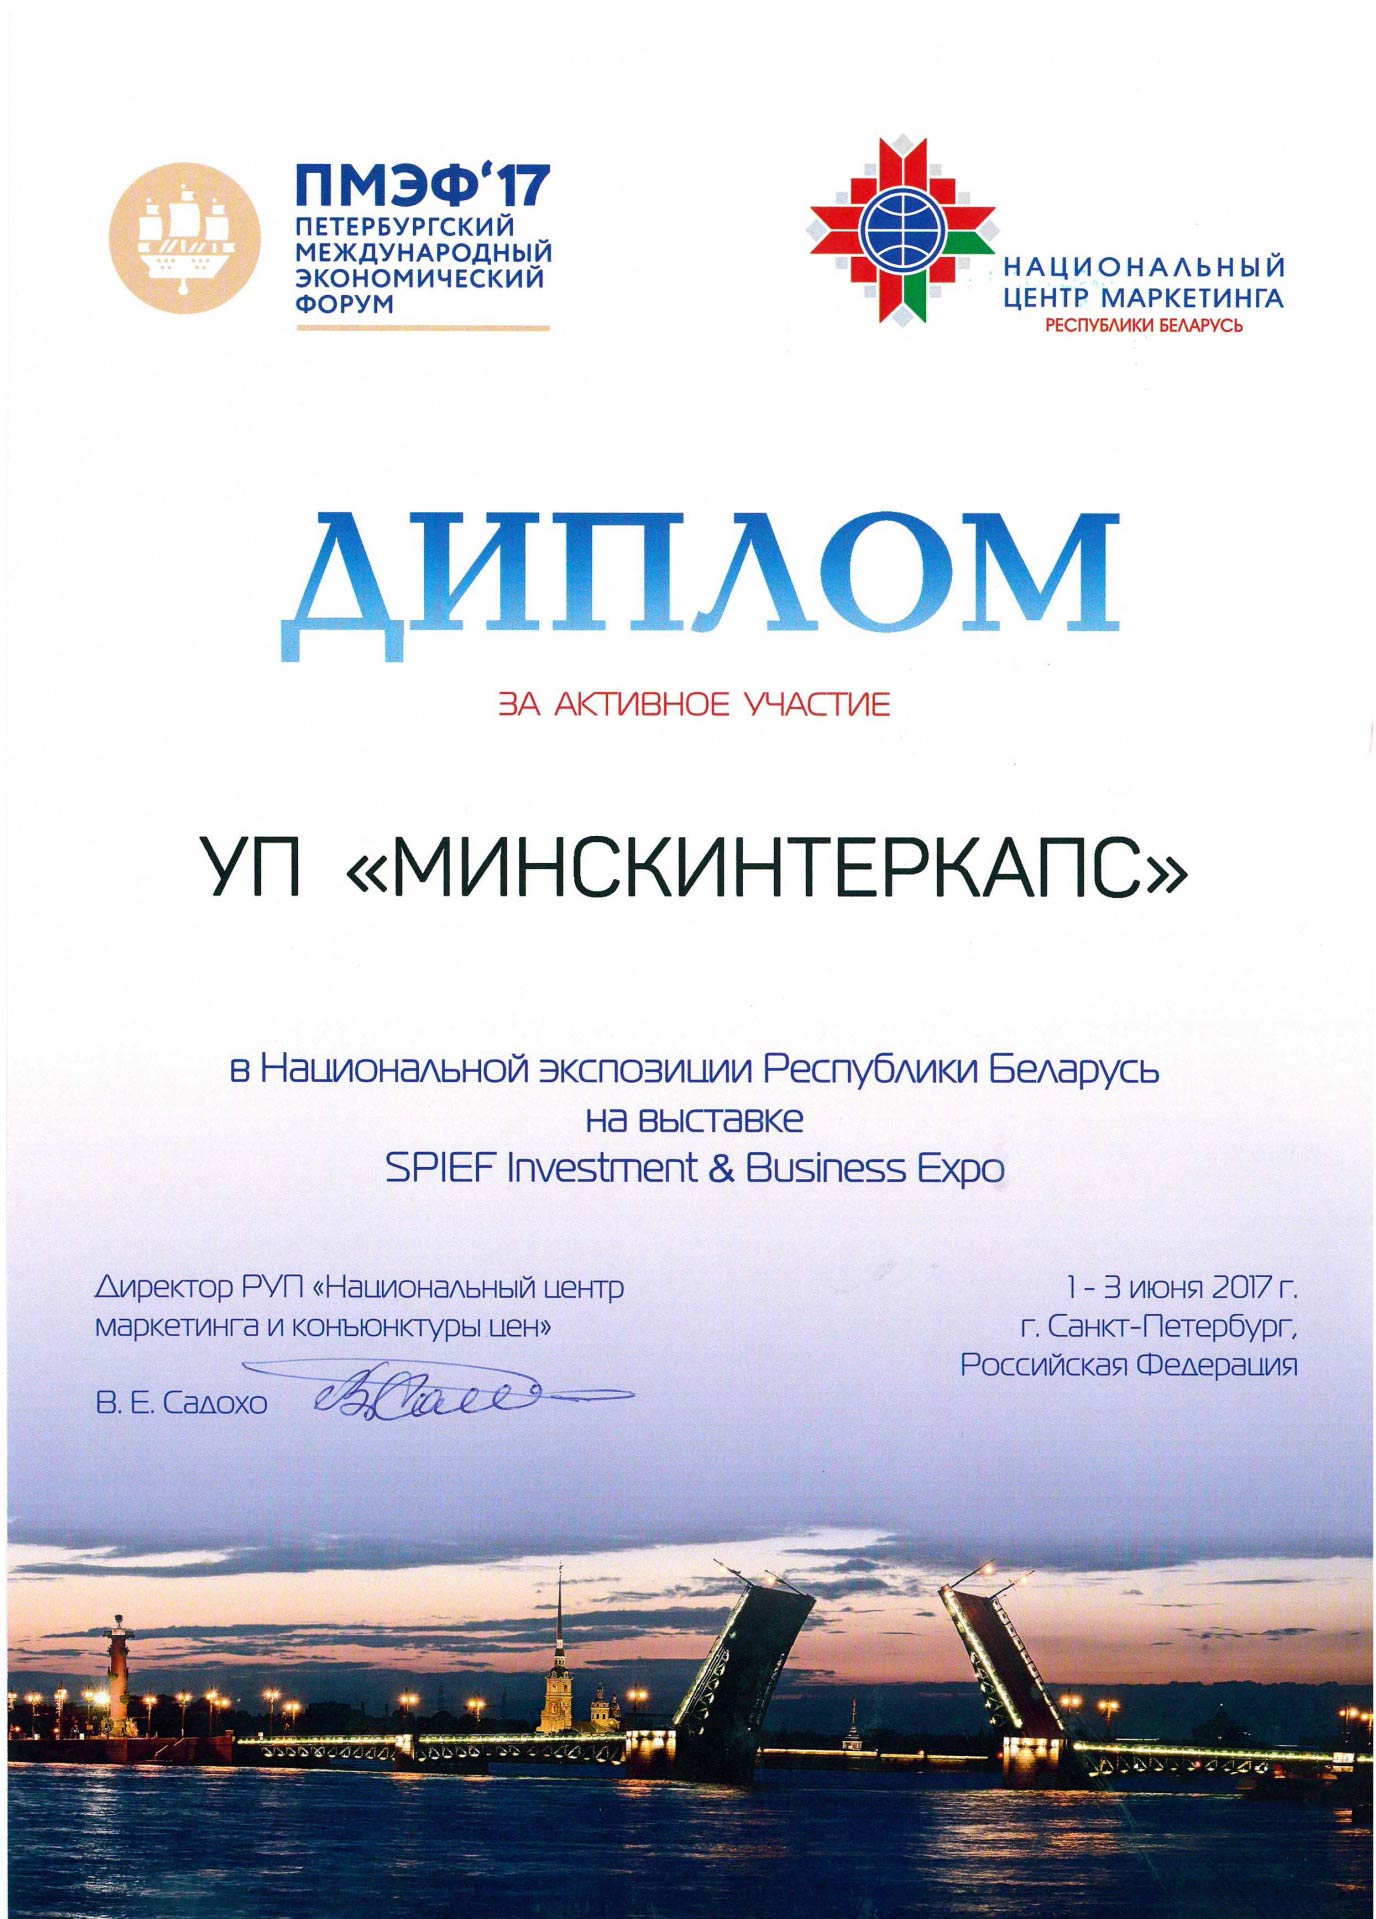 Minskintercaps participates in XXI Petersburg international business forum 